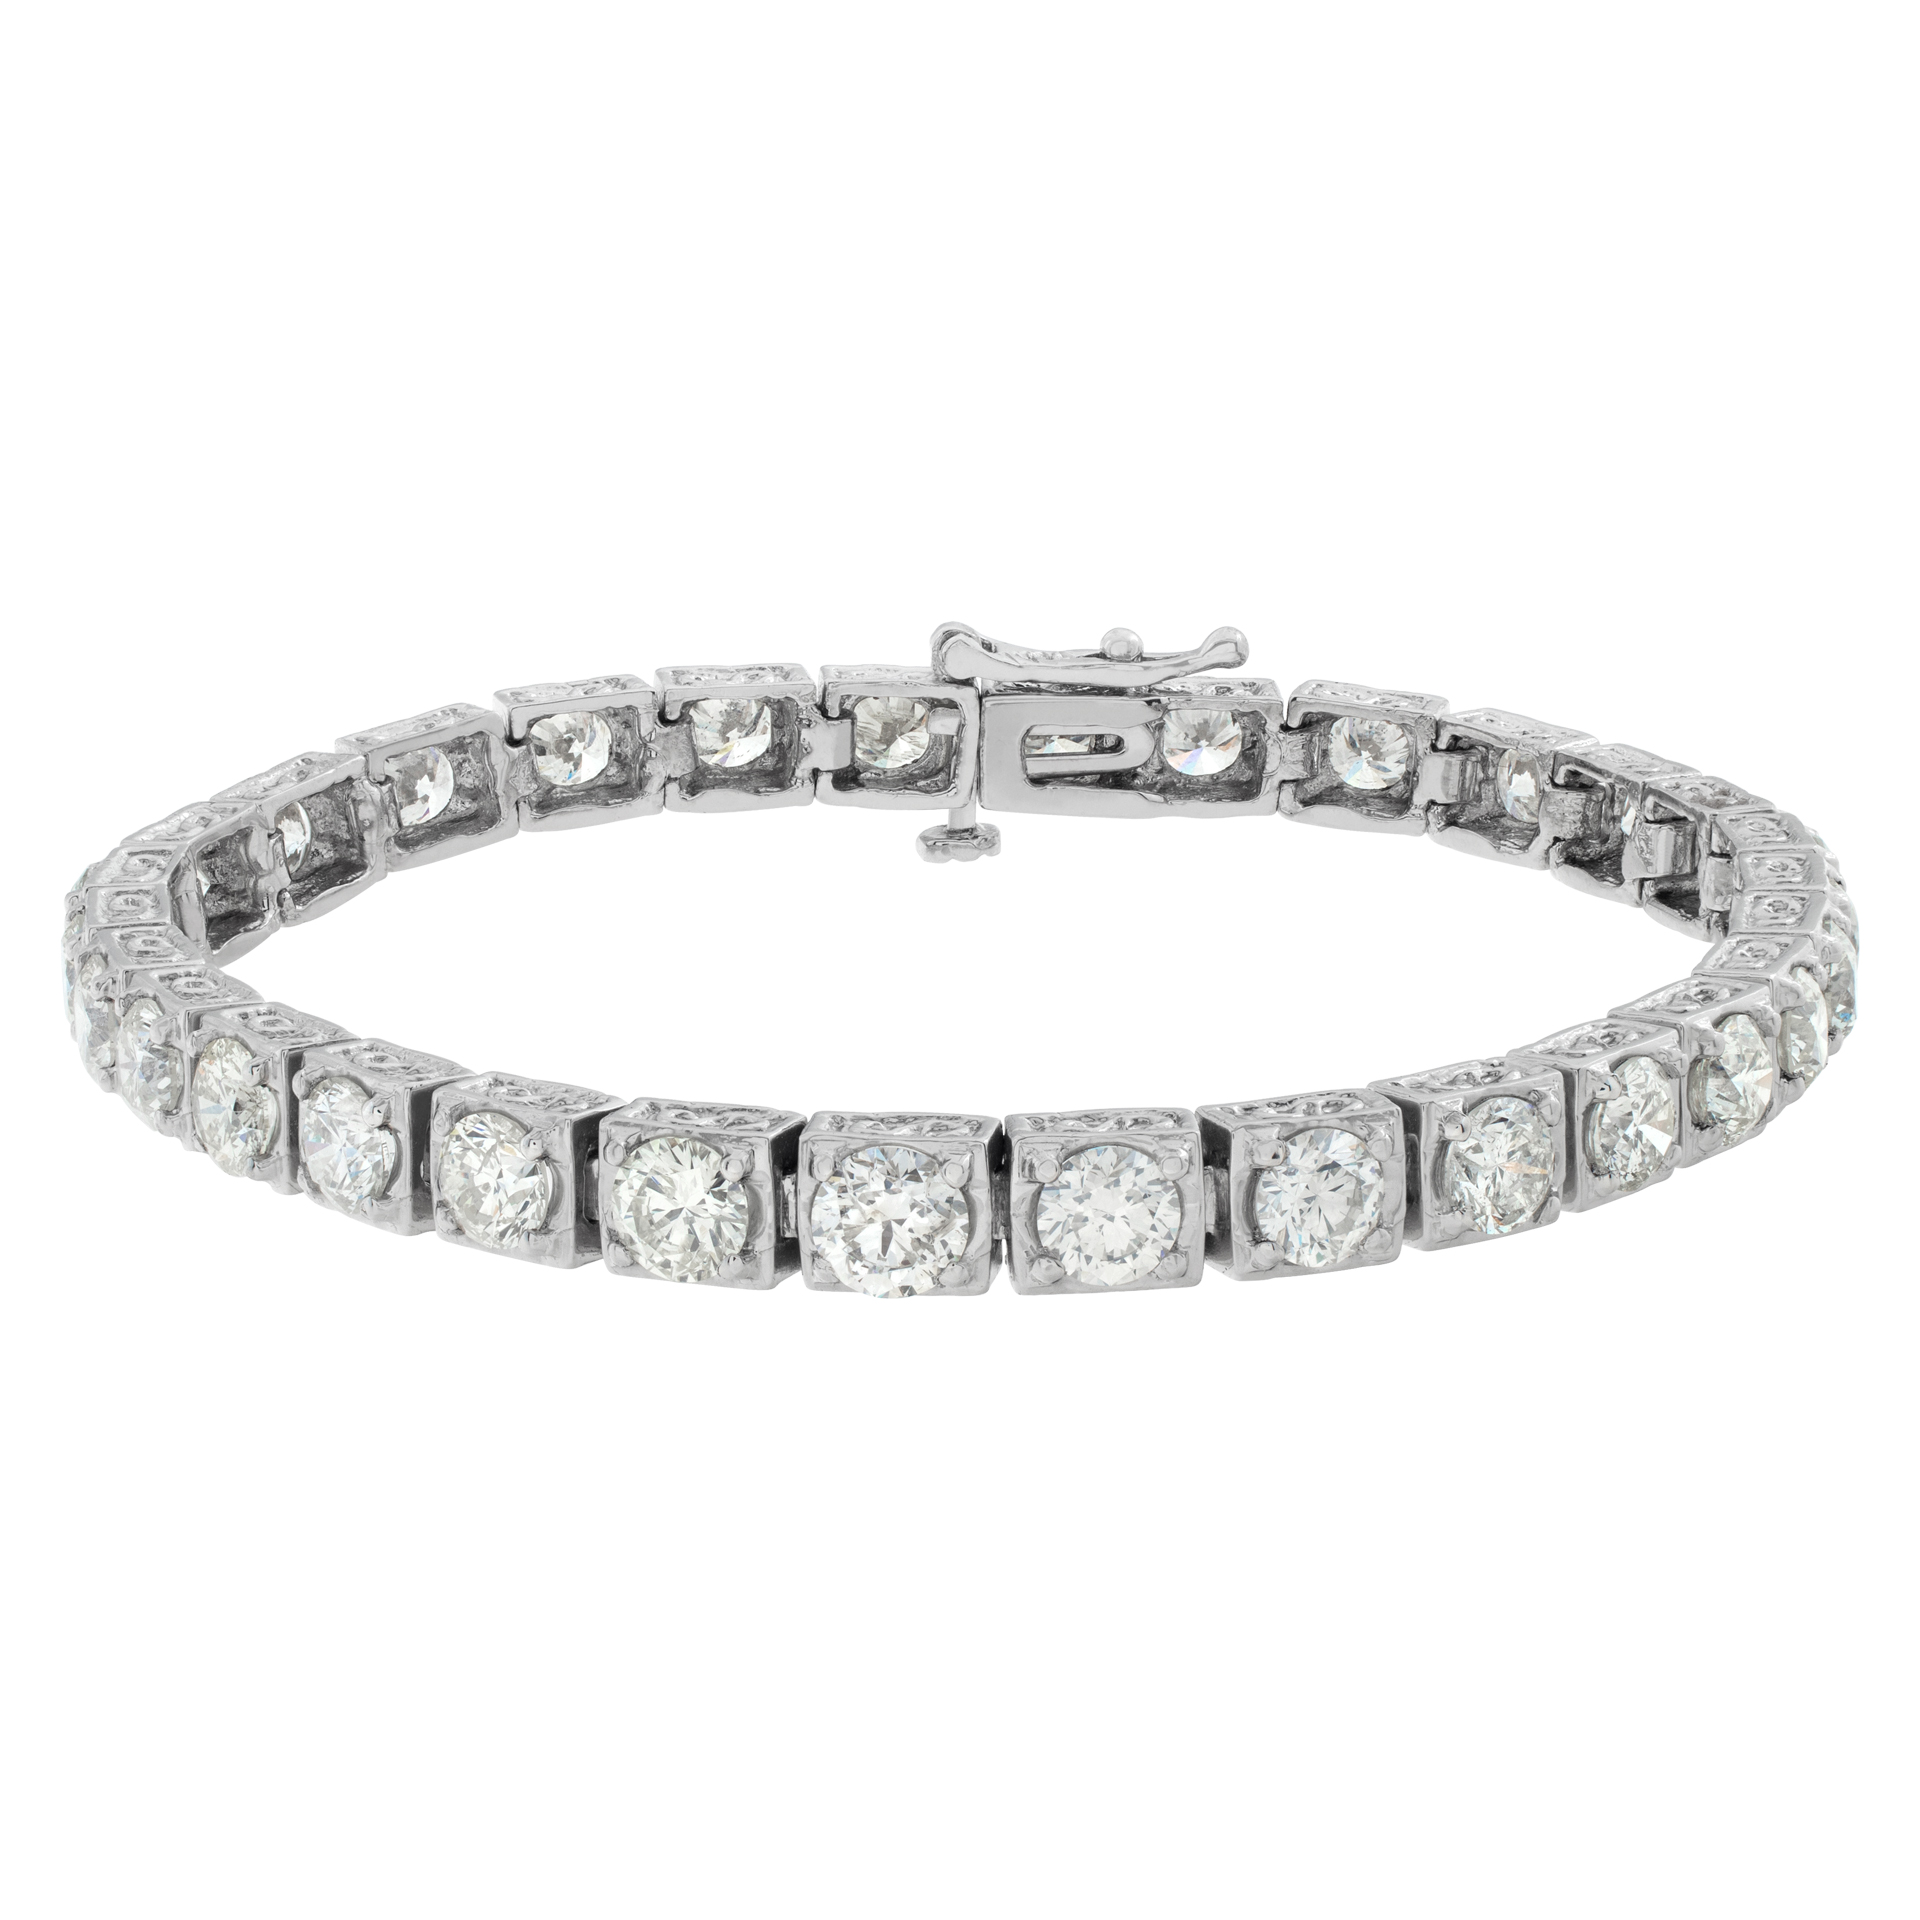 Platinum diamond bracelet with 10 carats in diamonds